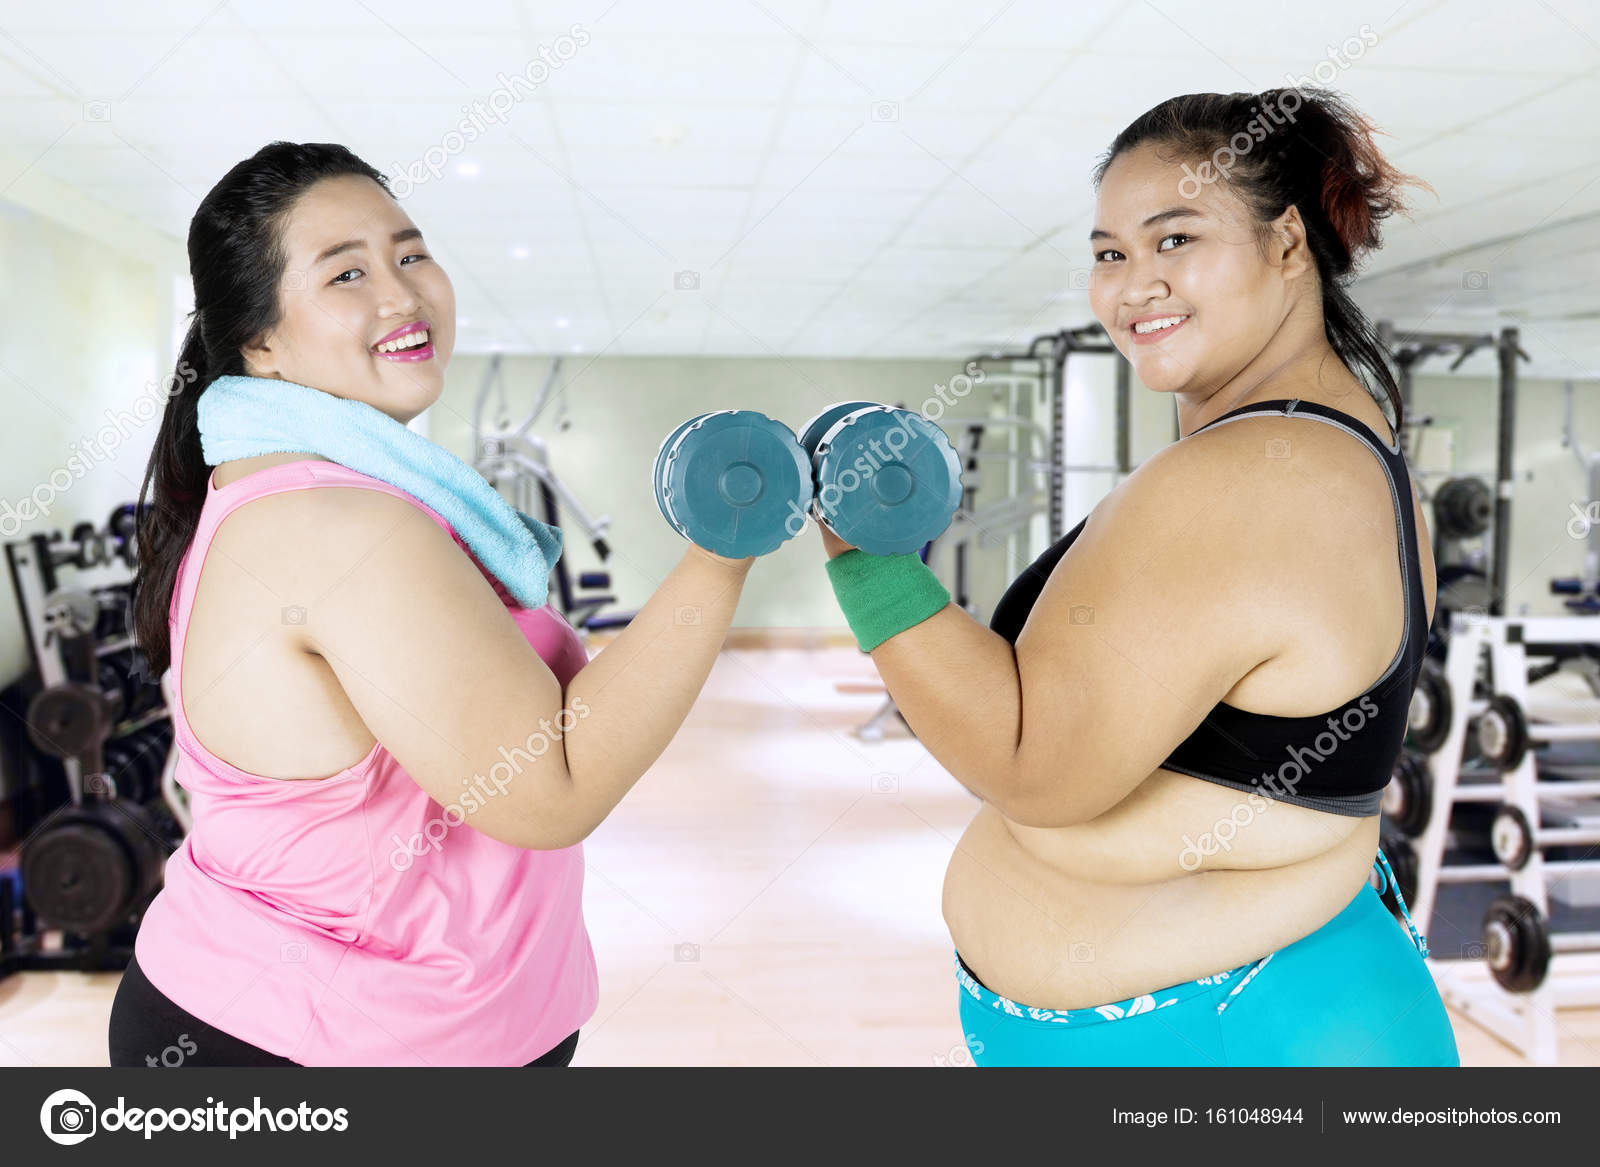 depositphotos_161048944-stock-photo-attractive-fat-women-doing-workout.jpg